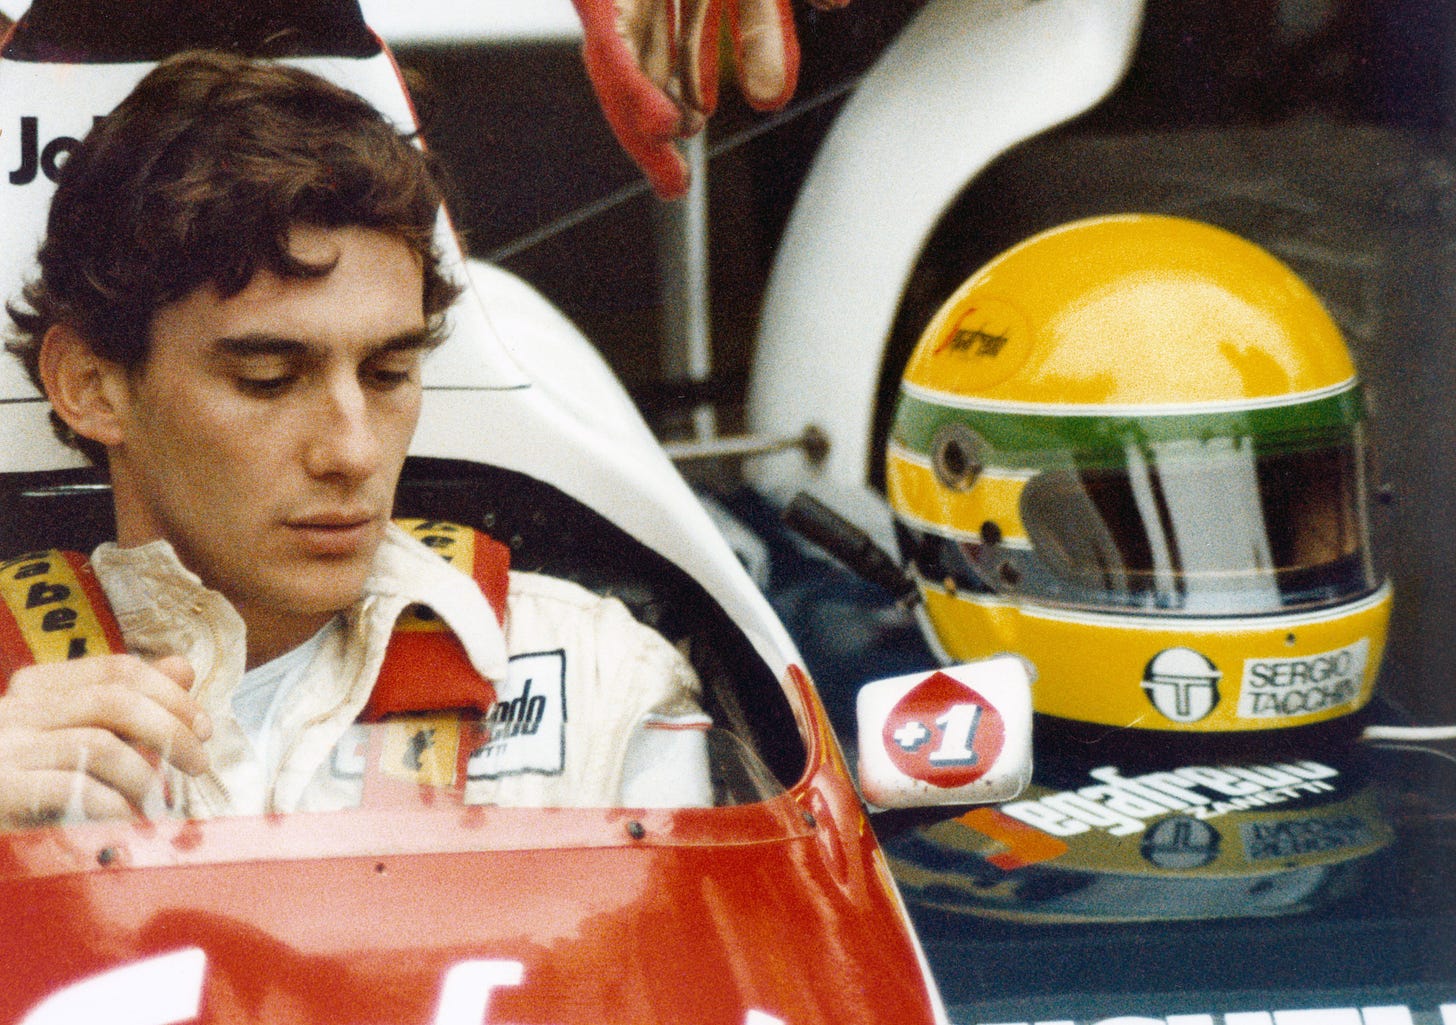 Still from the Senna documentary. F1 racecar driver Ayrton Senna sits in his car, helmet beside him.